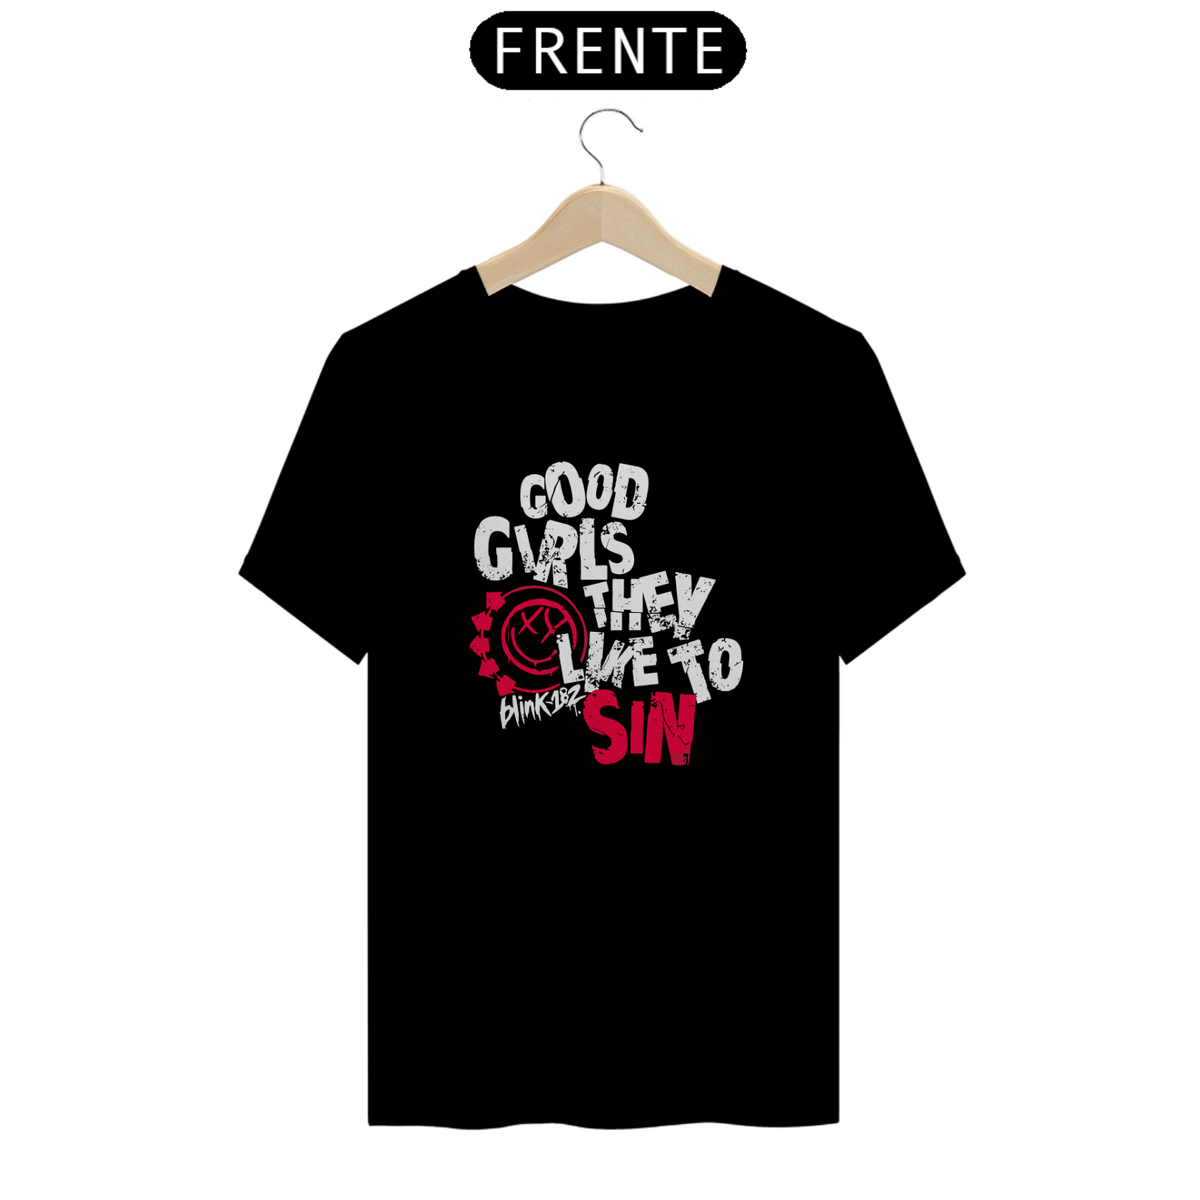 Nome do produto: Camiseta Unissex - Blink 182 Good Girls They Like To Sin